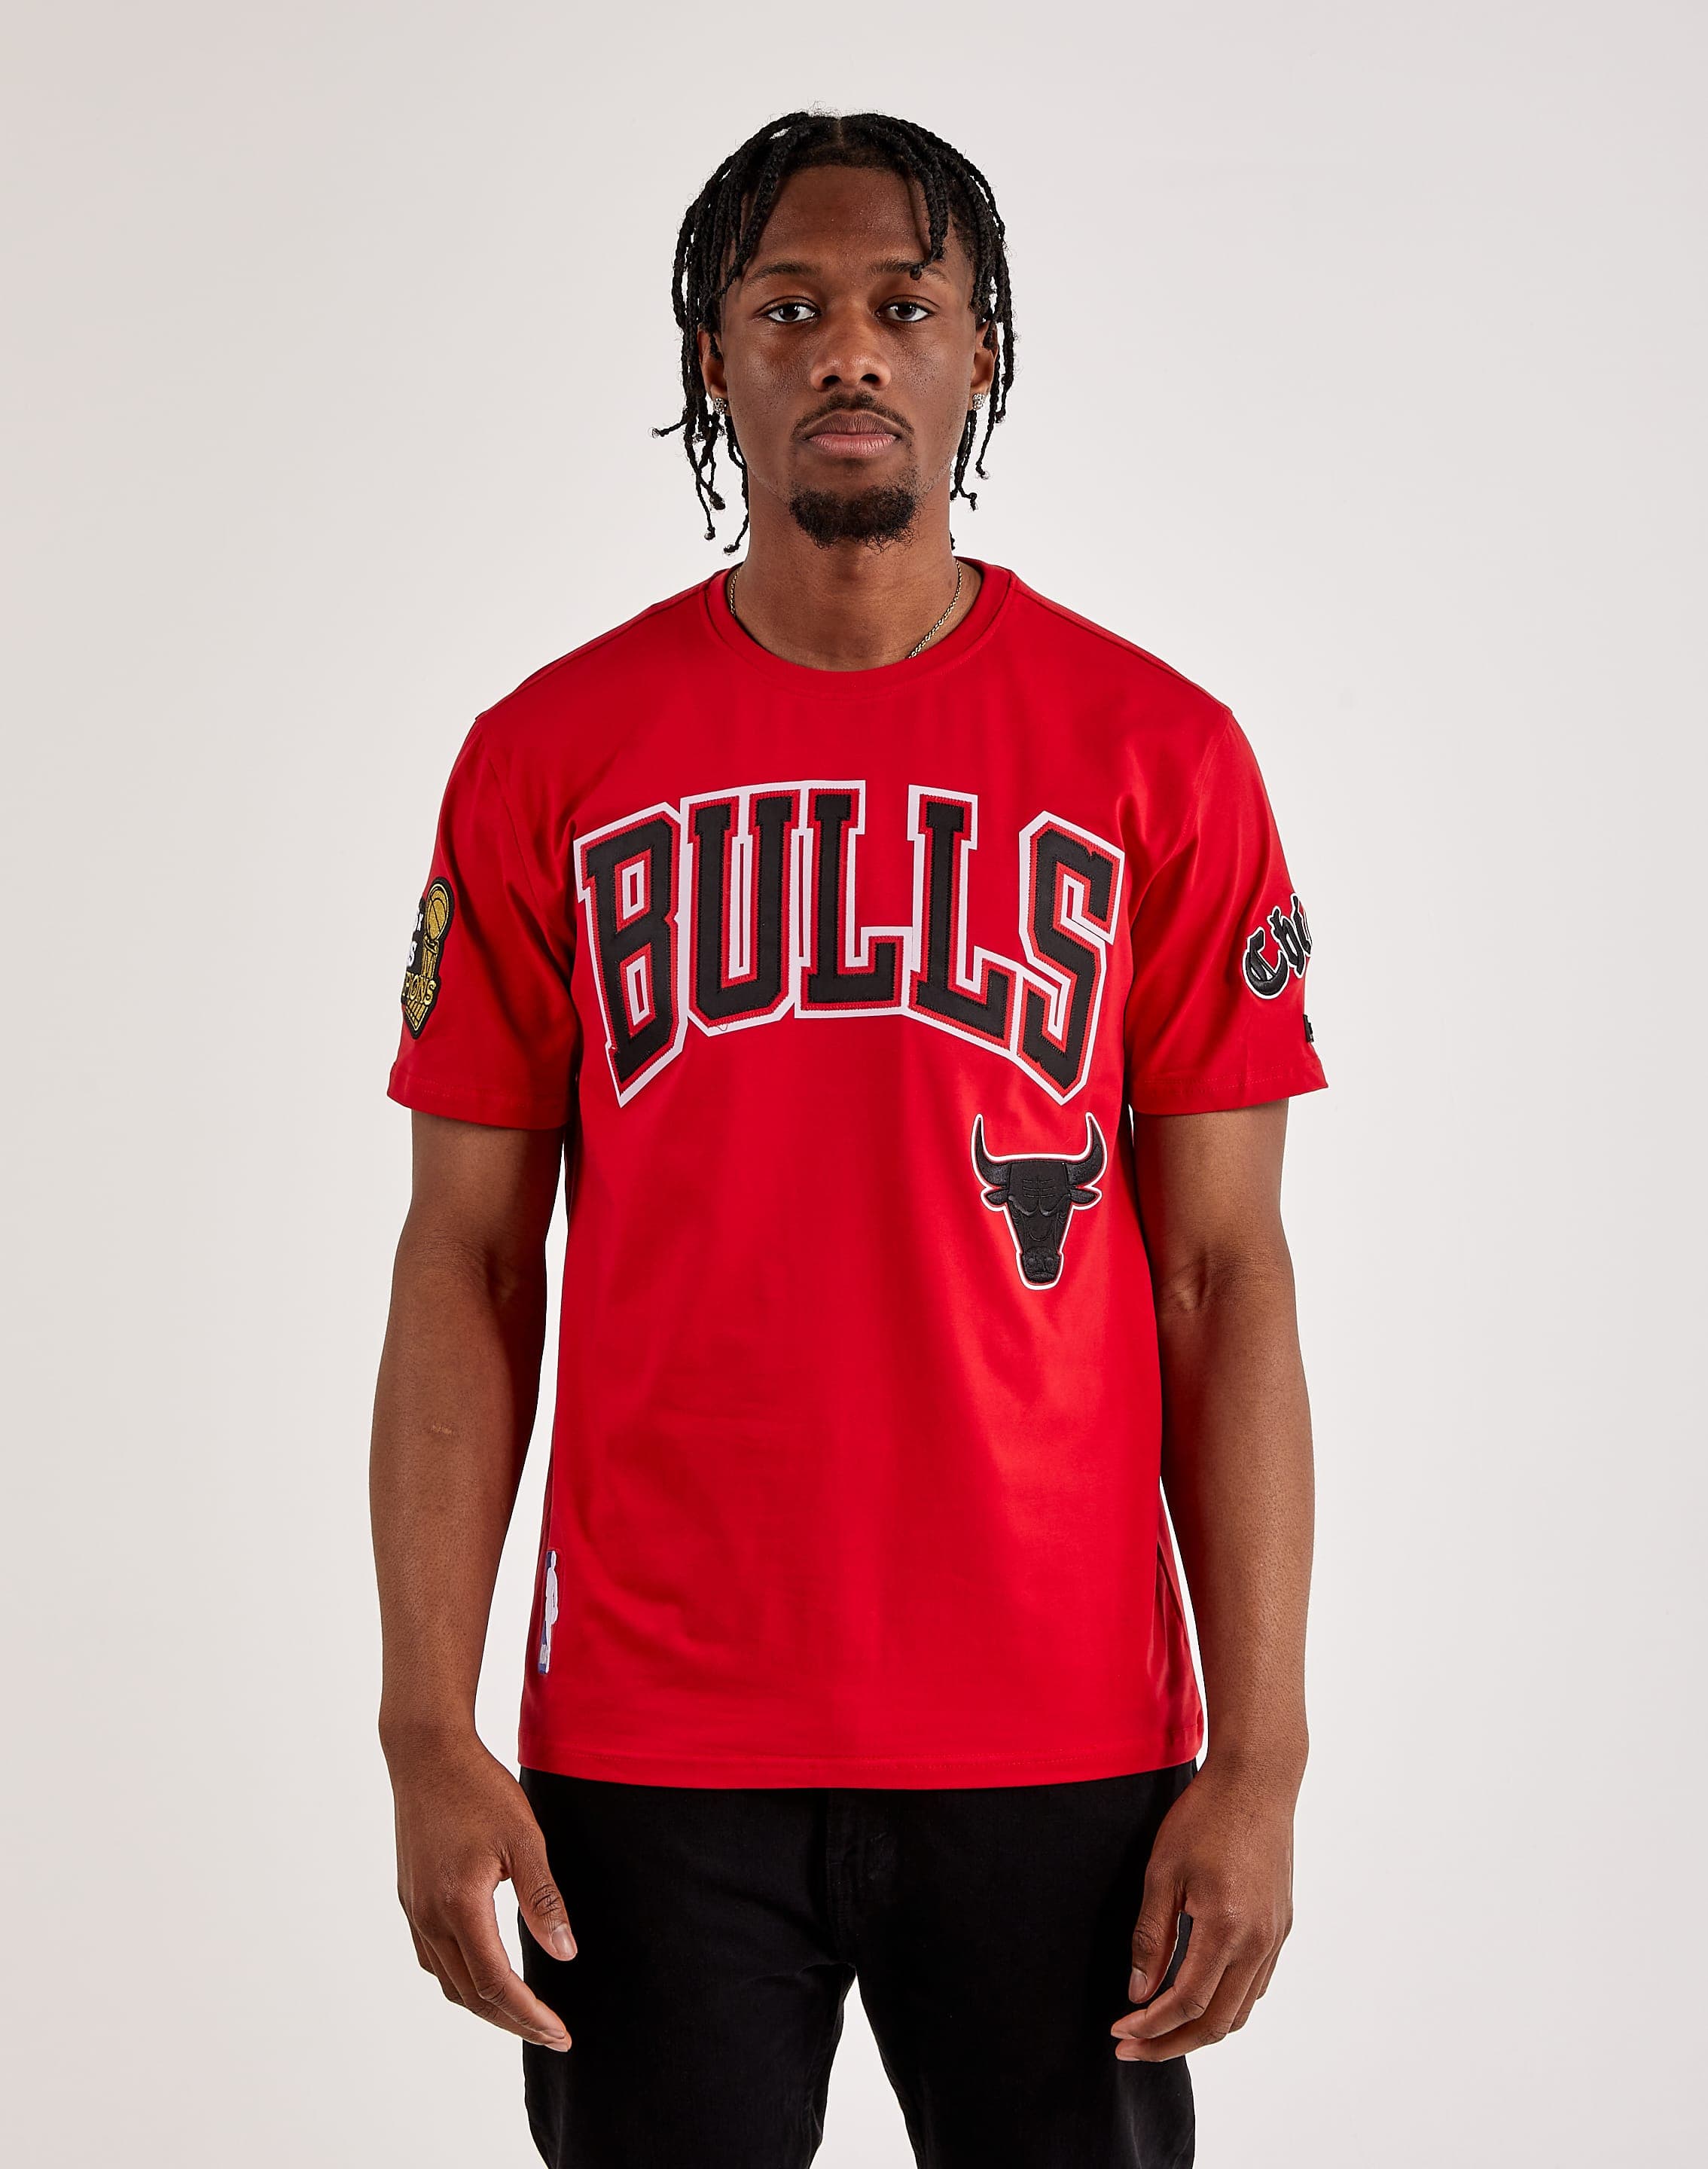 Chicago Bulls Gear, Bulls Jerseys, Bulls Gifts, Apparel